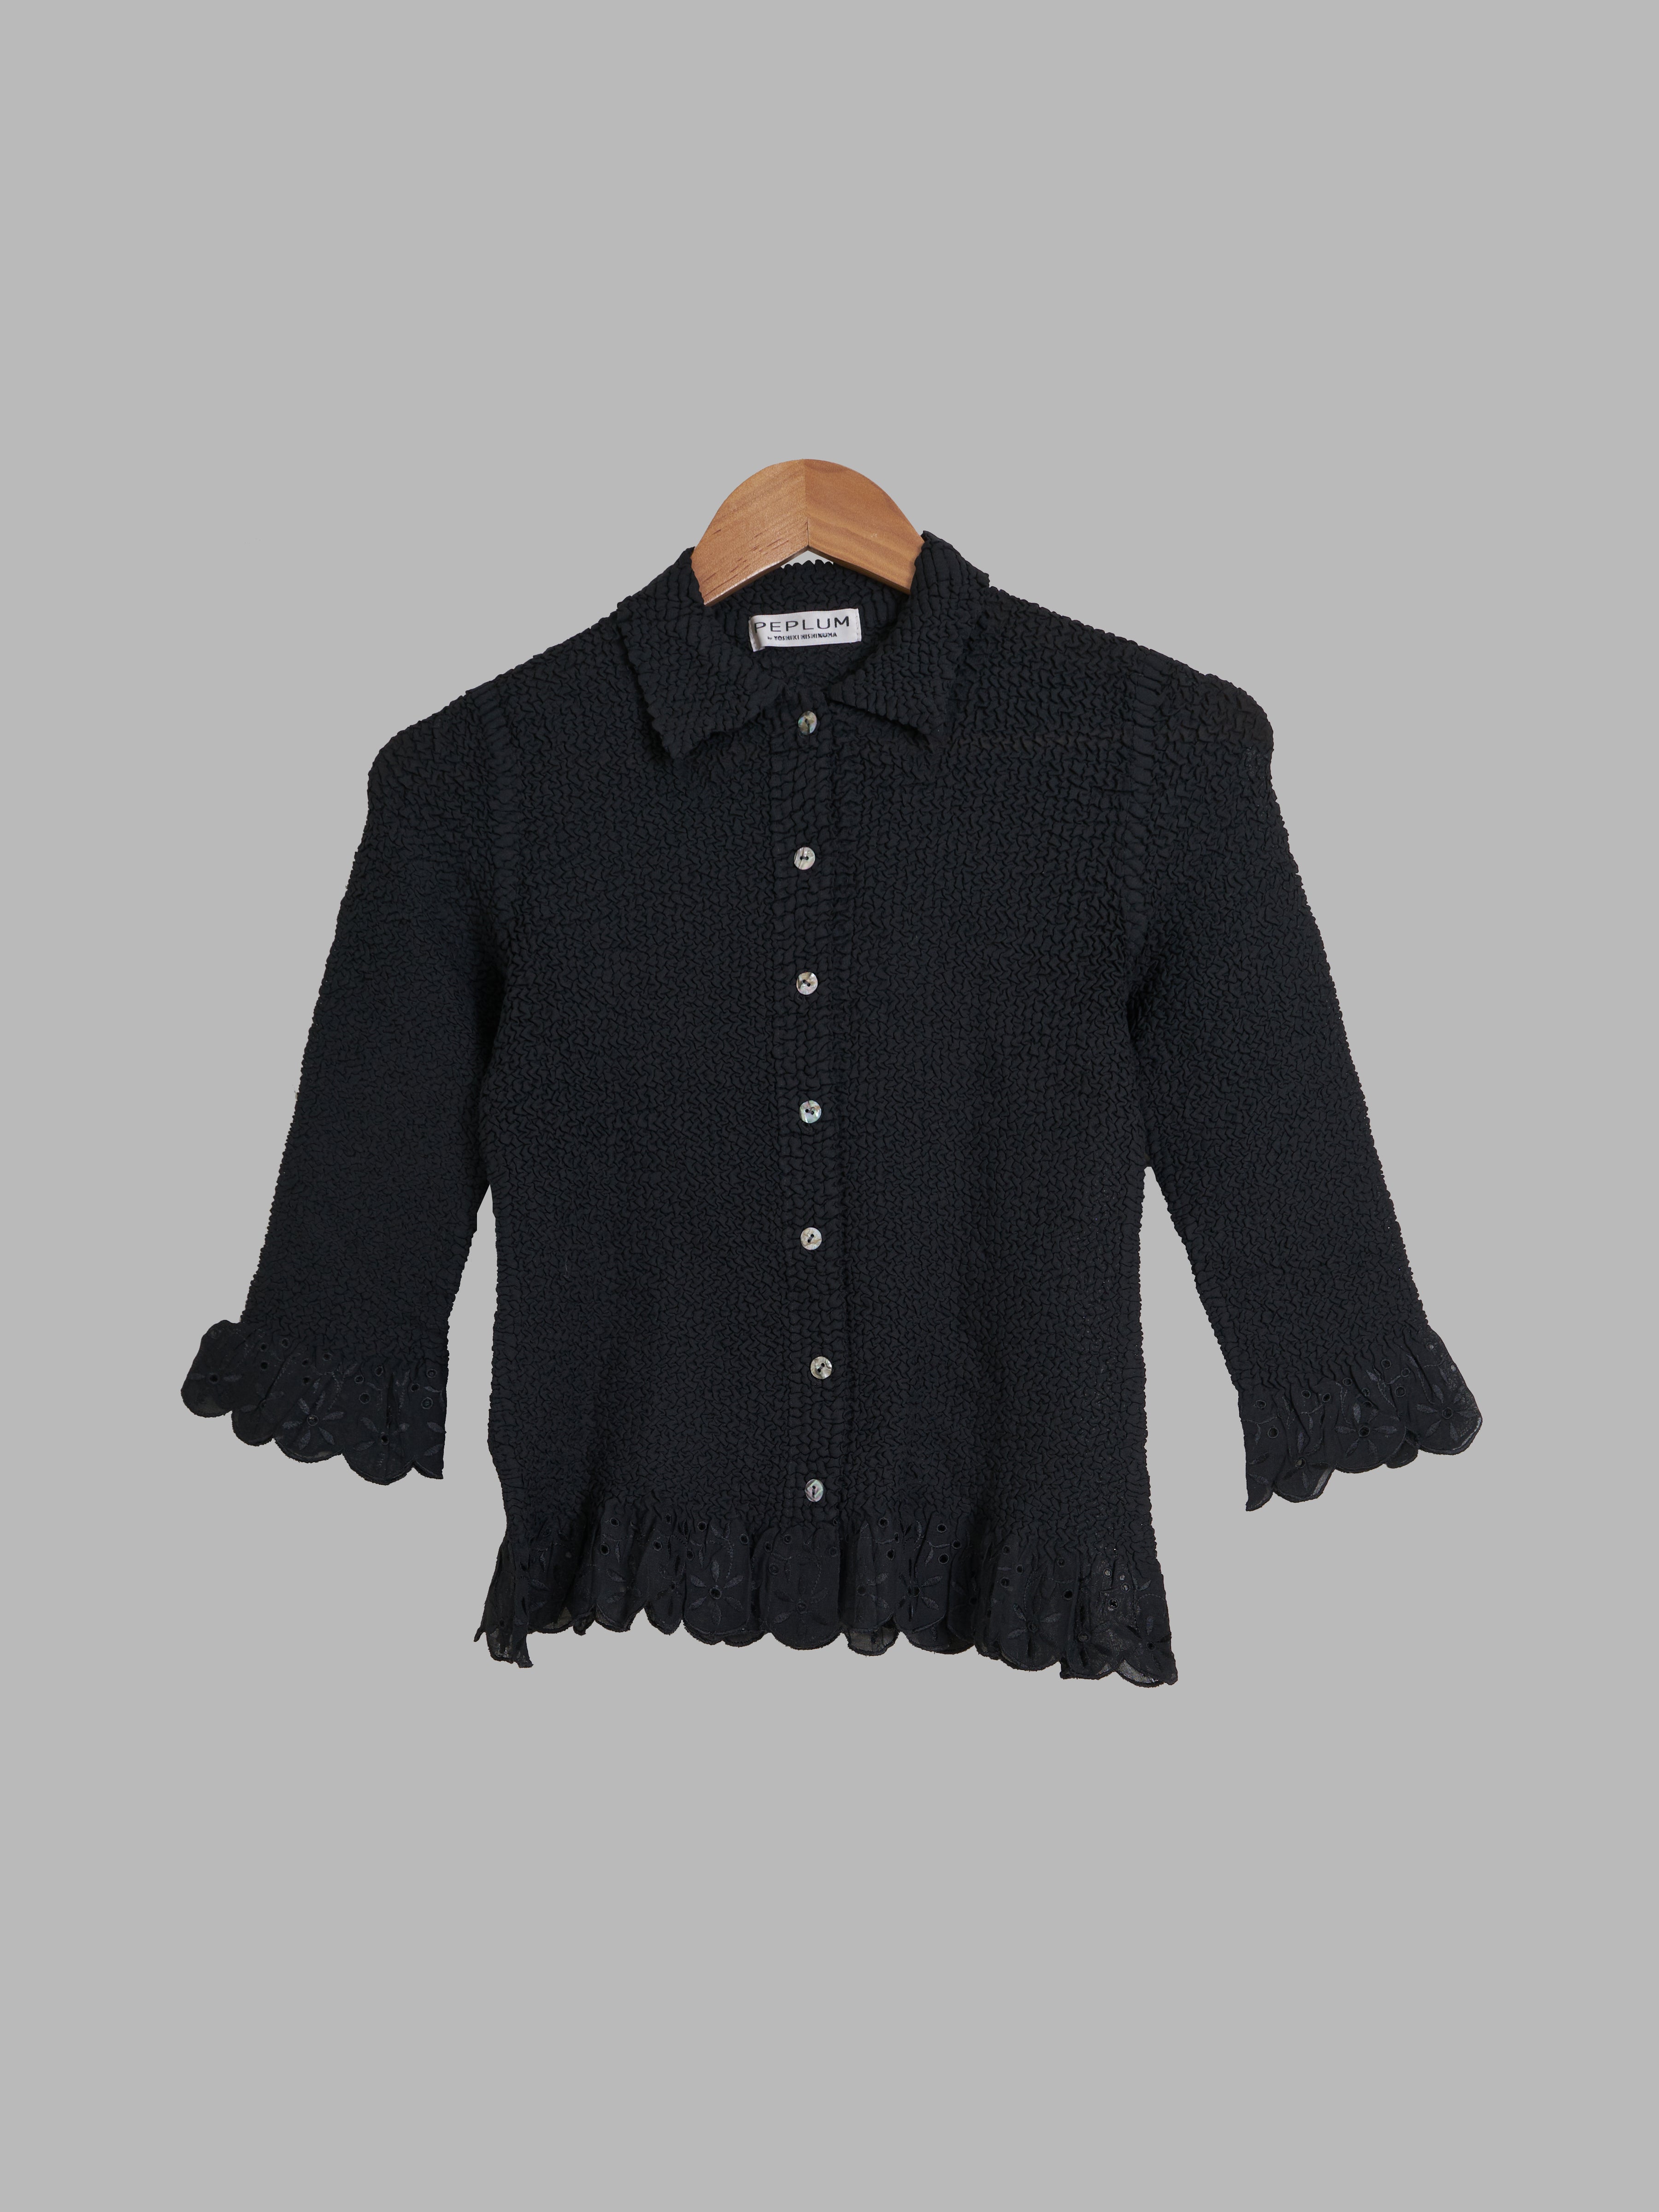 Yoshiki Hishinuma Peplum black wrinkled poly lace trim half sleeve shirt -  2 S